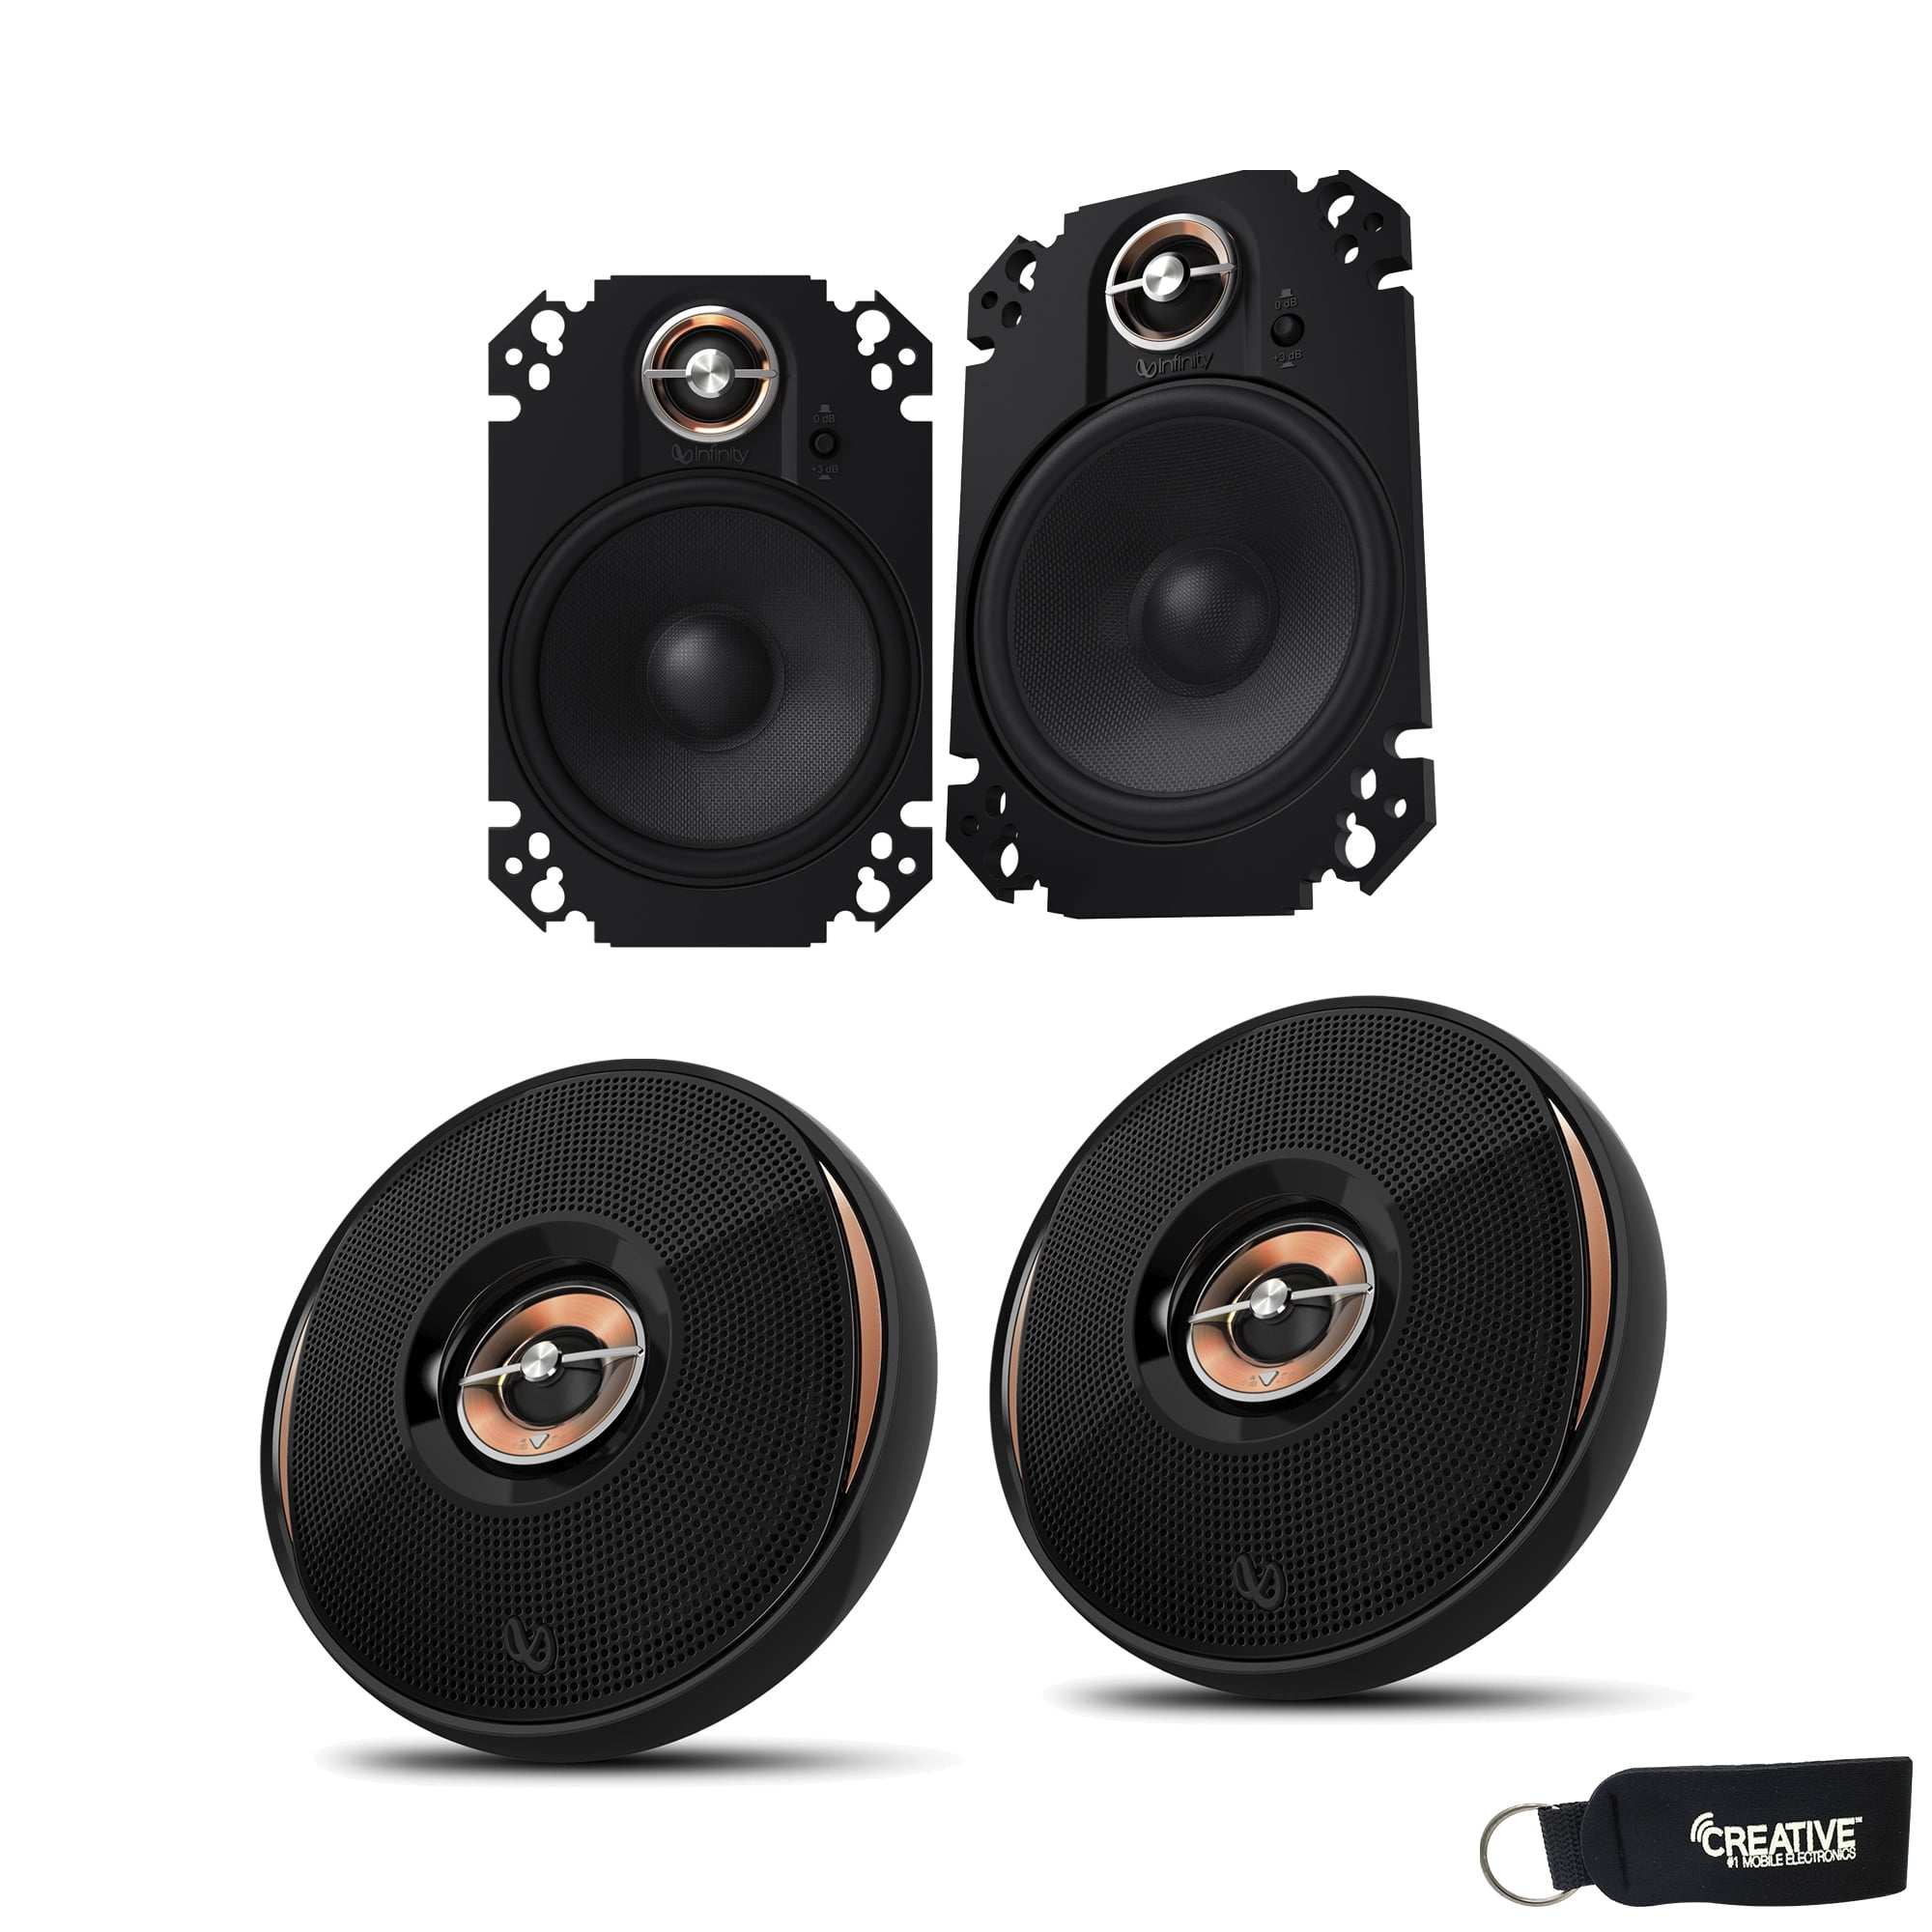 Infinity KAPPA-62IX 6.5" Coaxial Speakers + Infinity KAPPA-64CFX 4x6" Plate Speakers - Walmart.com